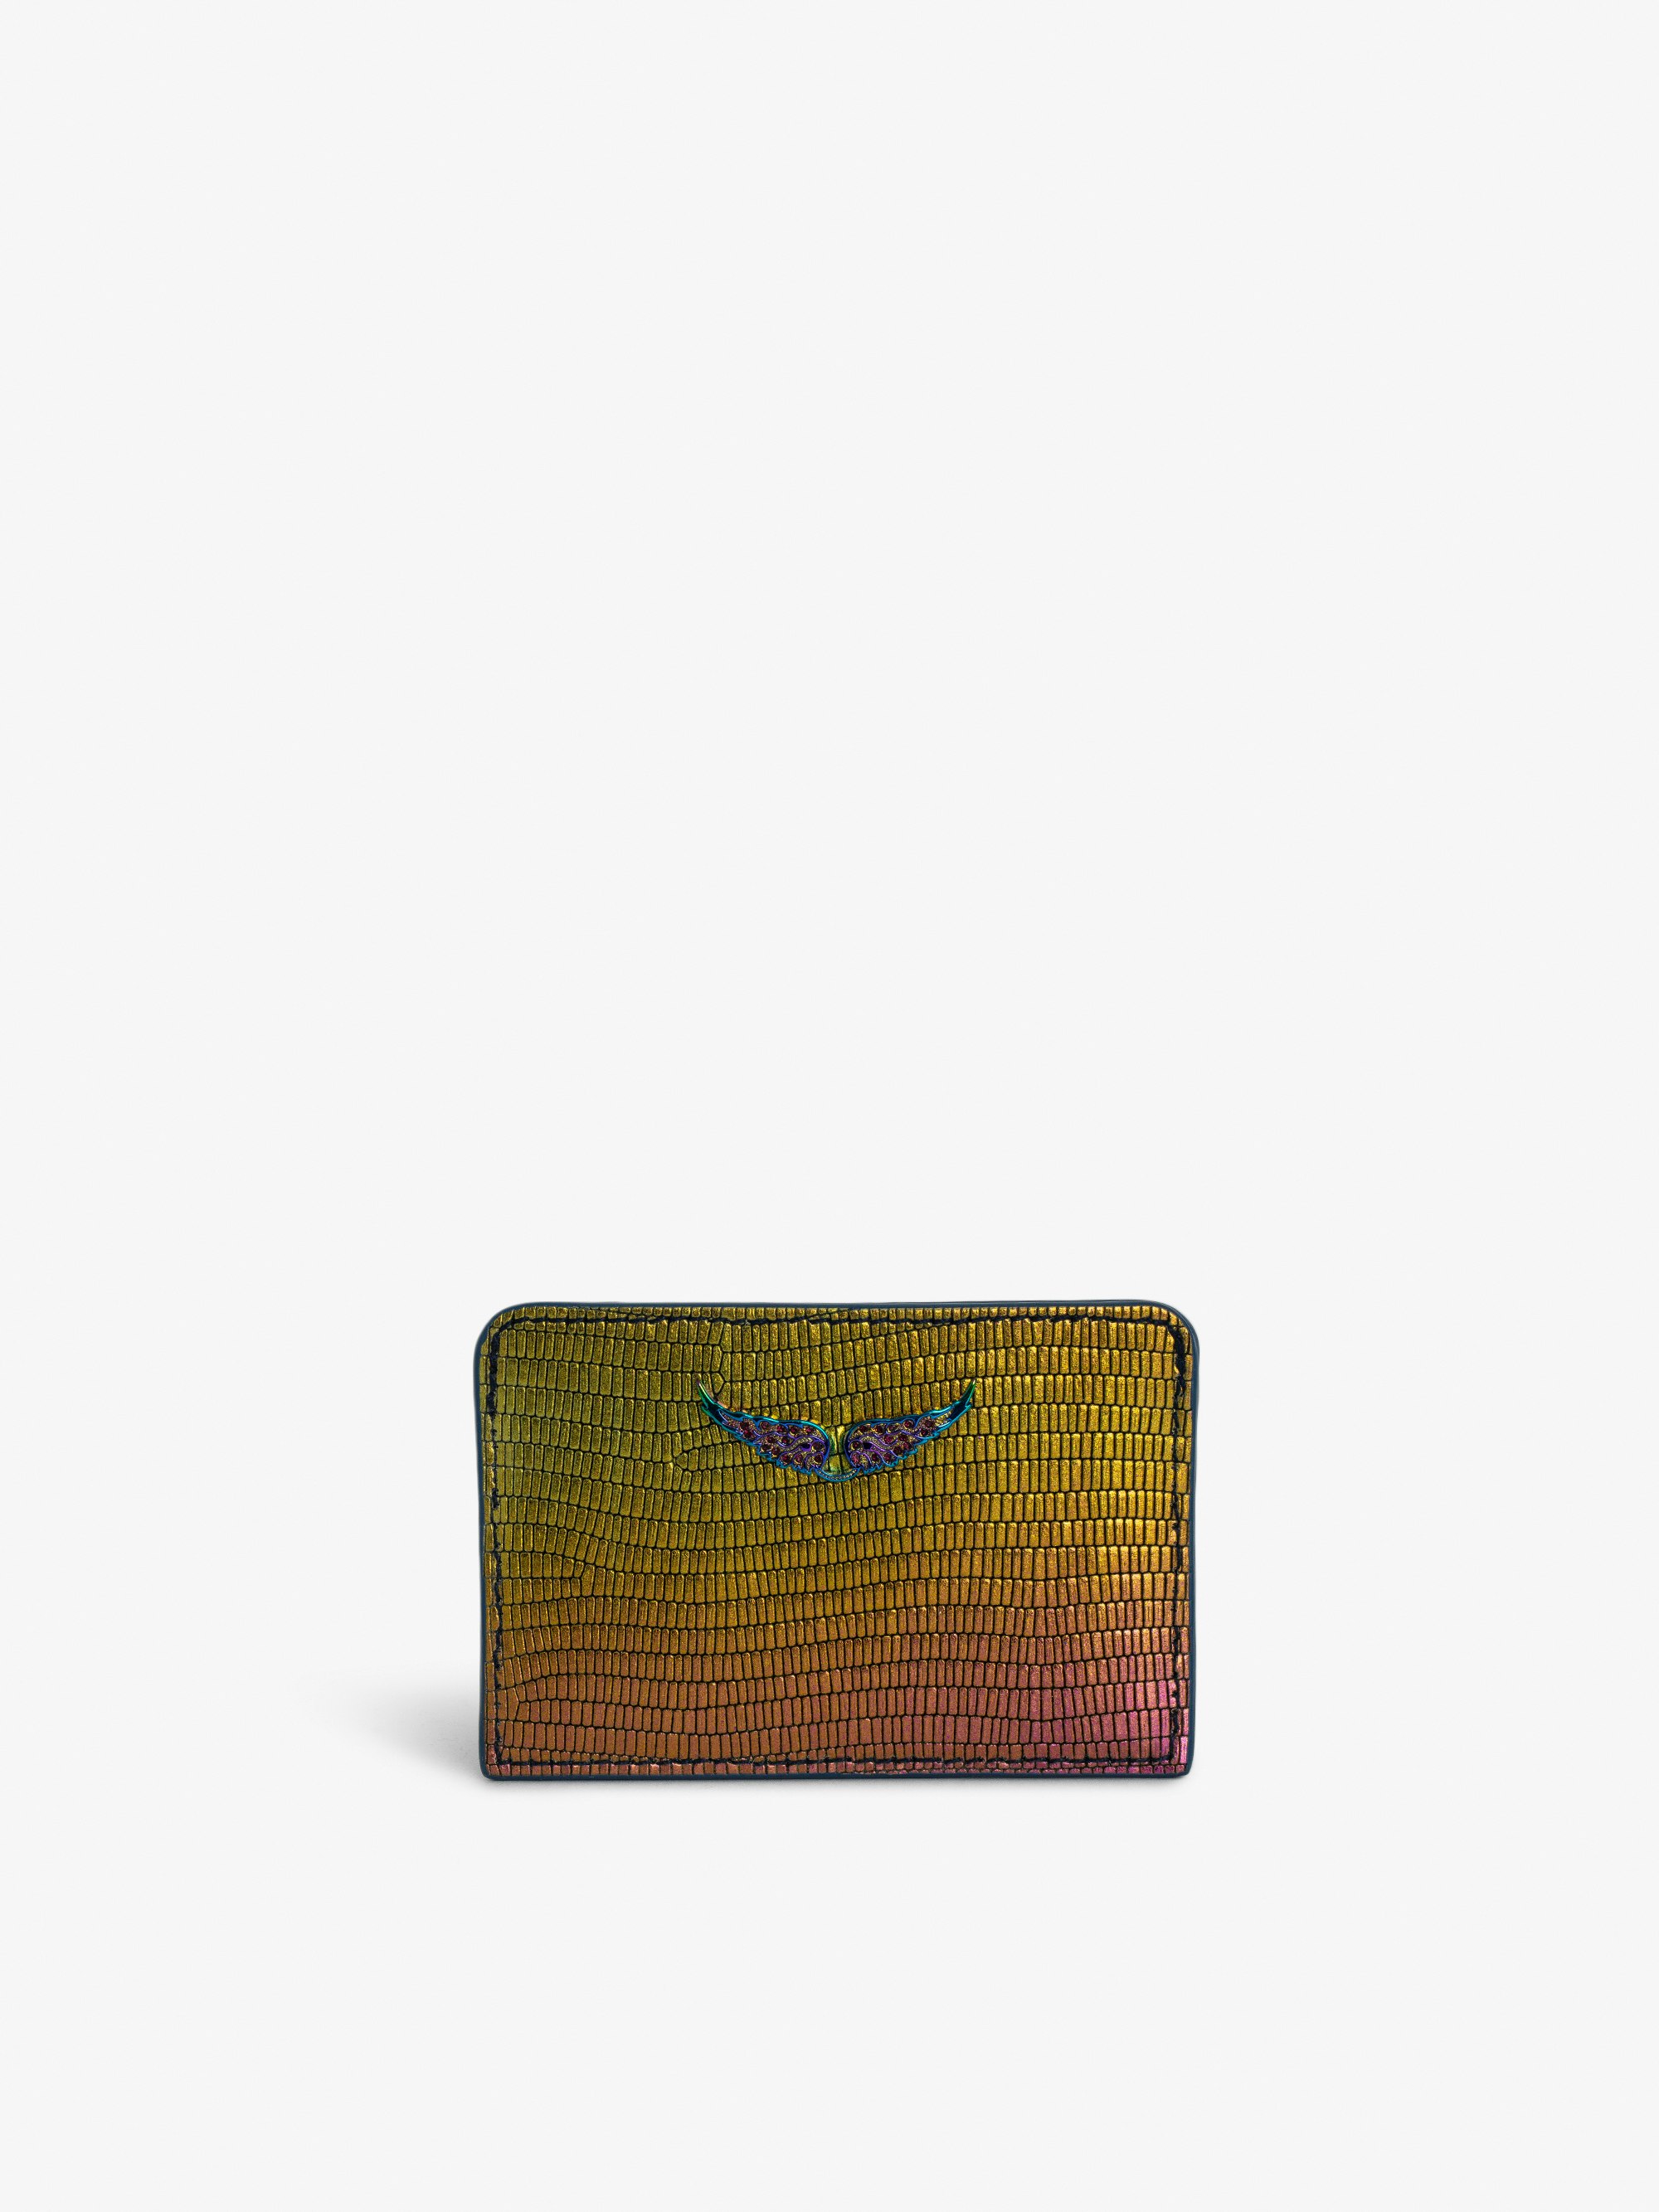 ZV Pass Embossed Metallic Card Holder - Rainbow iguana-embossed metallic leather card holder with diamanté wings charm.